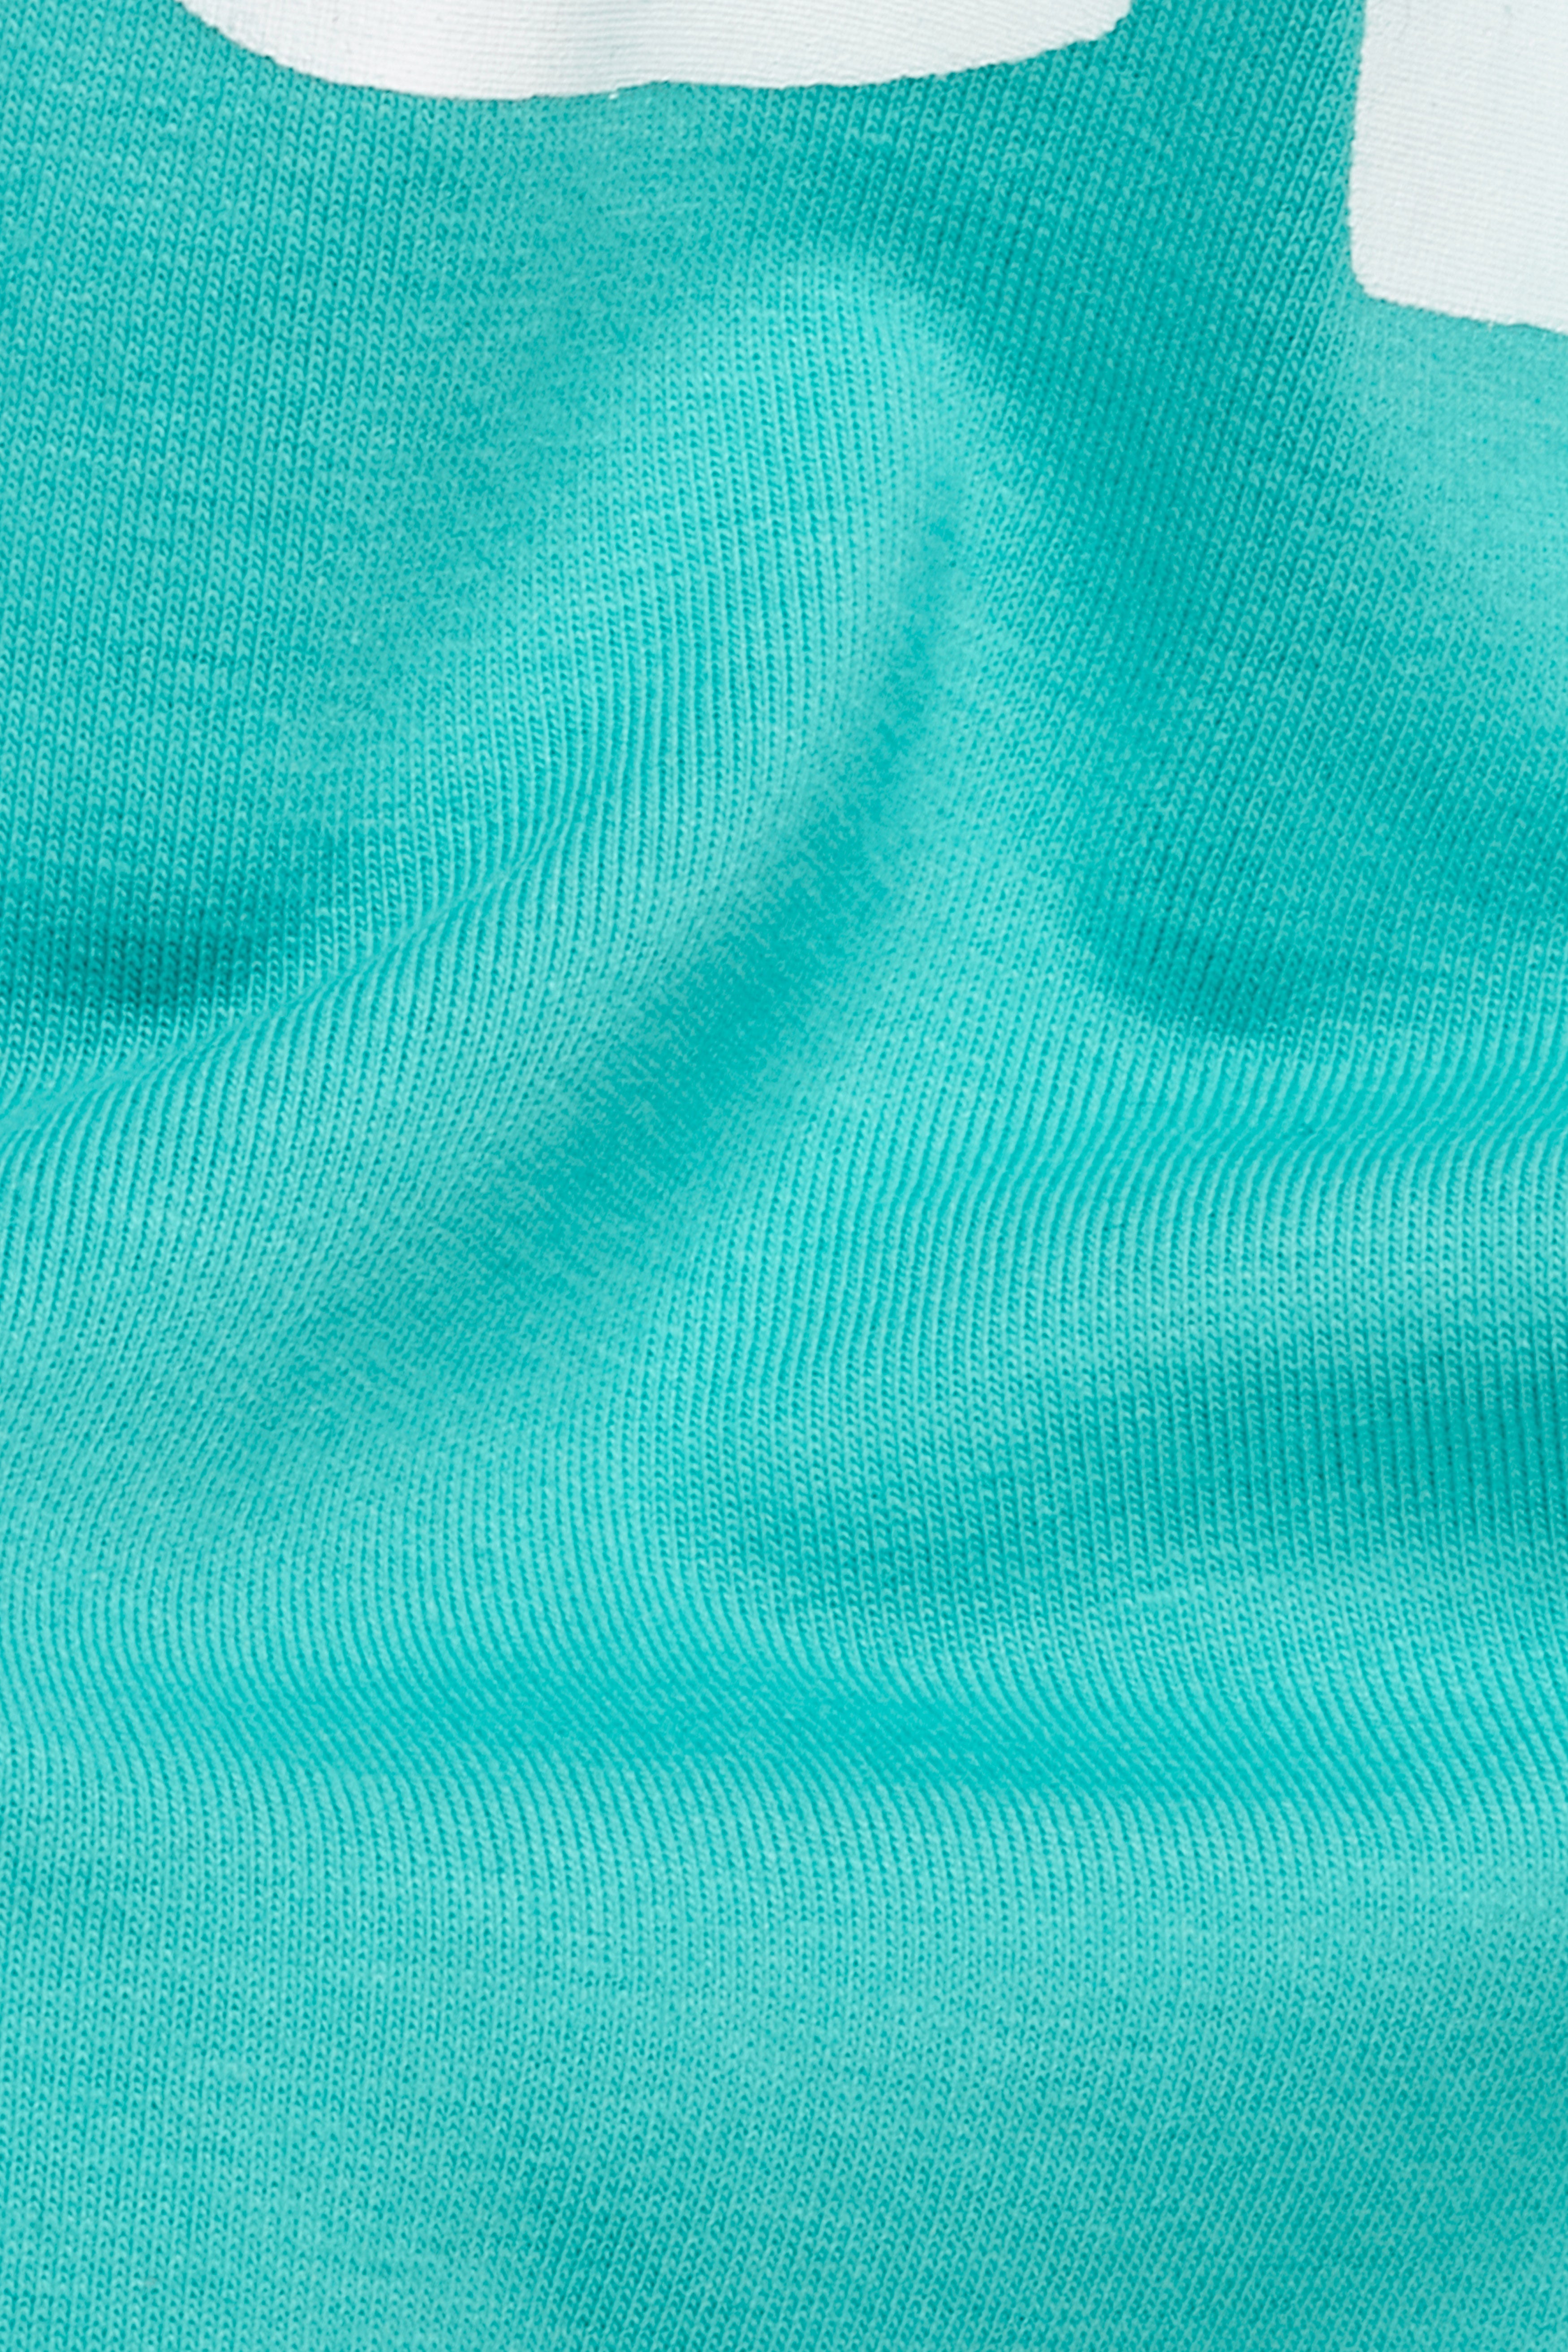 Aqua Blue Printed Premium Cotton Oversized T-shirt TS950-S, TS950-M, TS950-L, TS950-XL, TS950-XXL